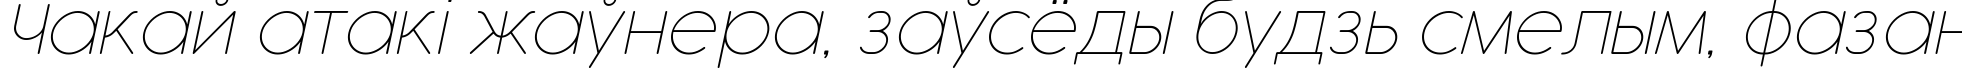 Пример написания шрифтом Cocogoose Pro Thin Italic текста на белорусском